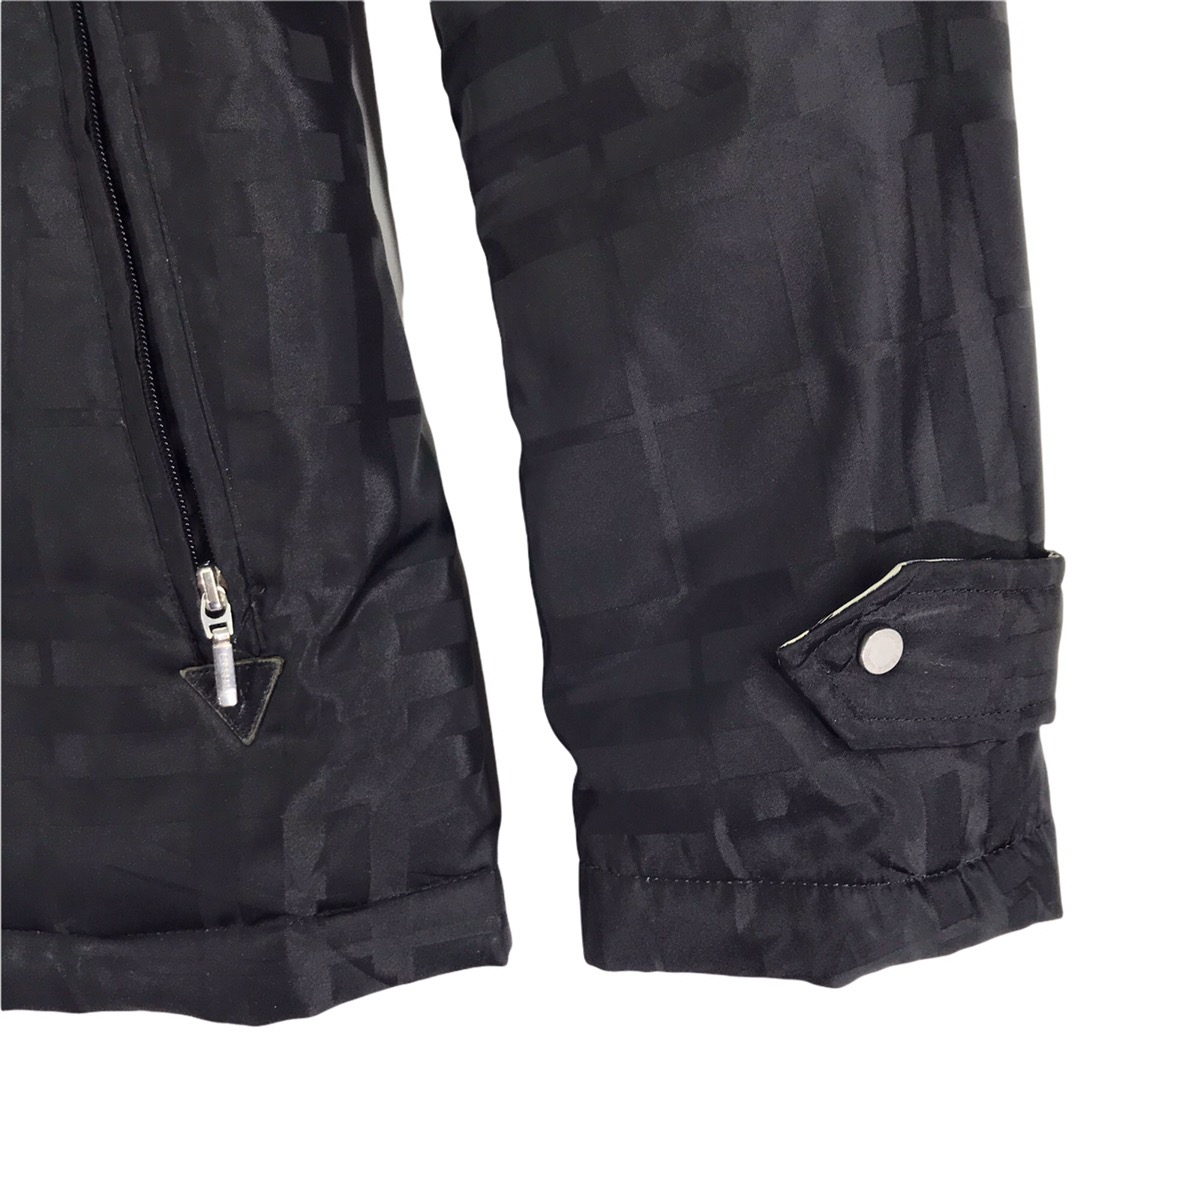 Burberry Black Label Nova check Jacket - 5